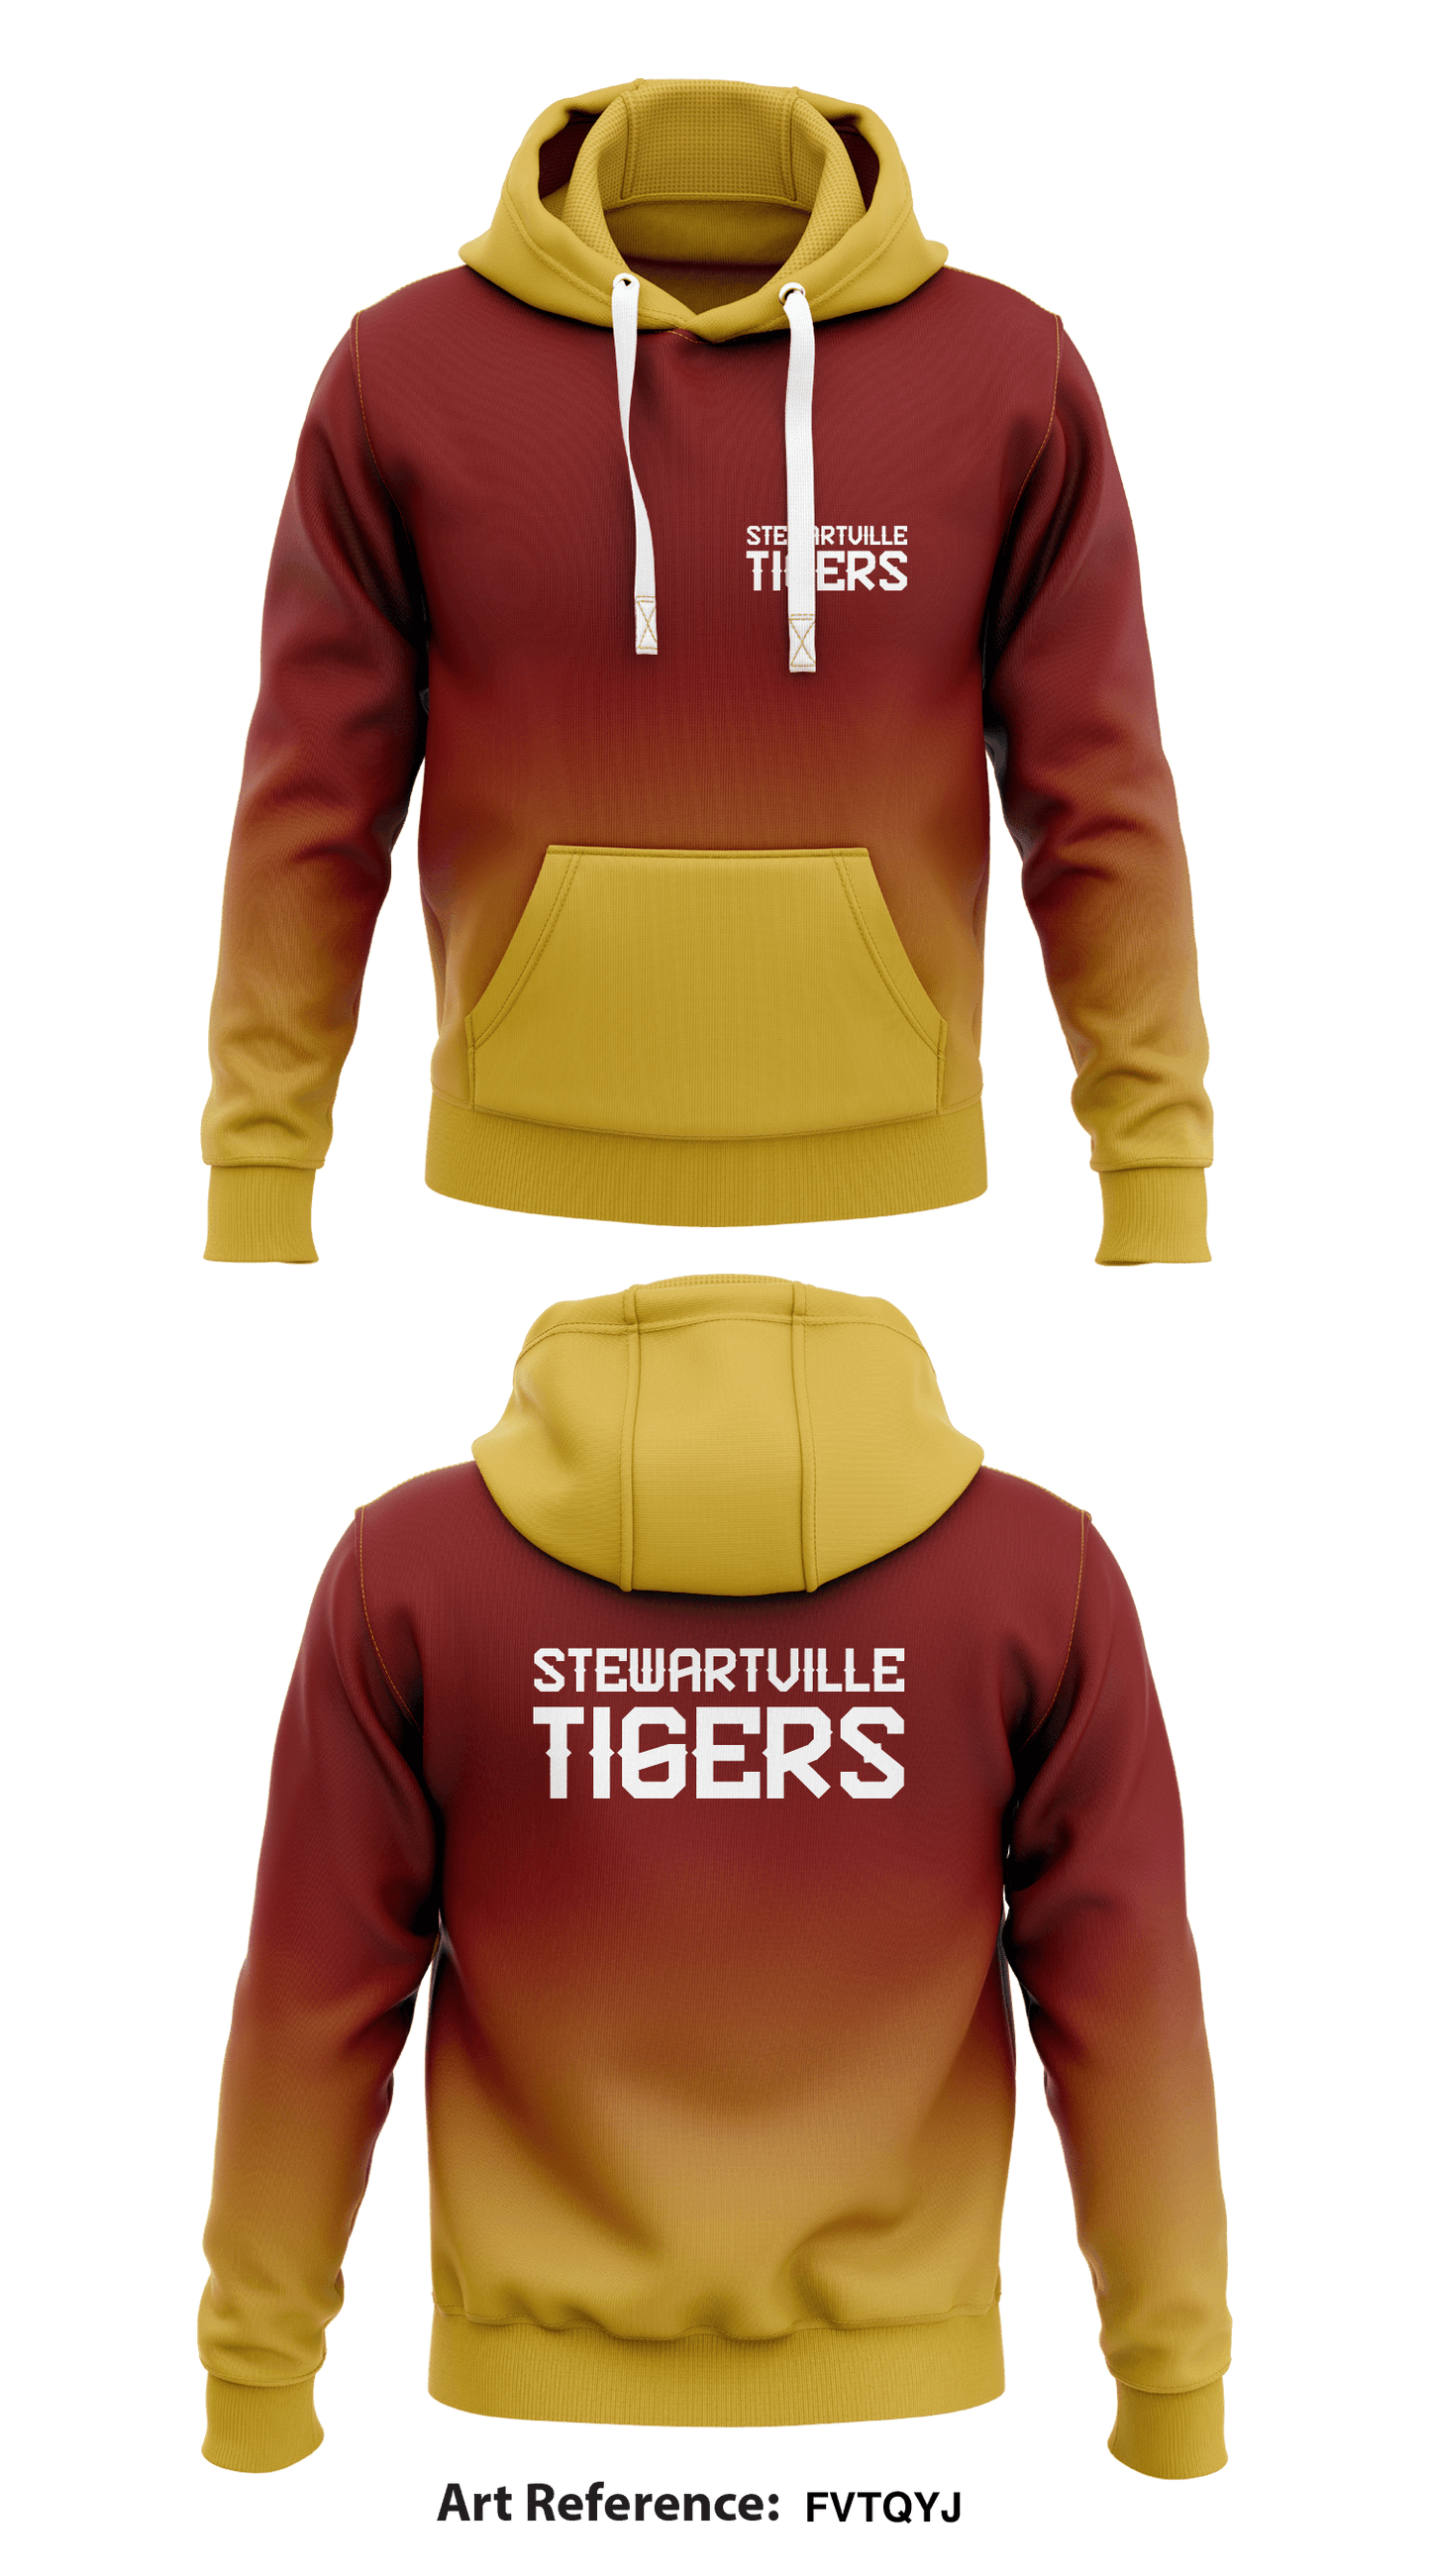 STEWARTVILLE TIGERS Store 1 Core Men's Hooded Performance Sweatshirt - FVTqyJ